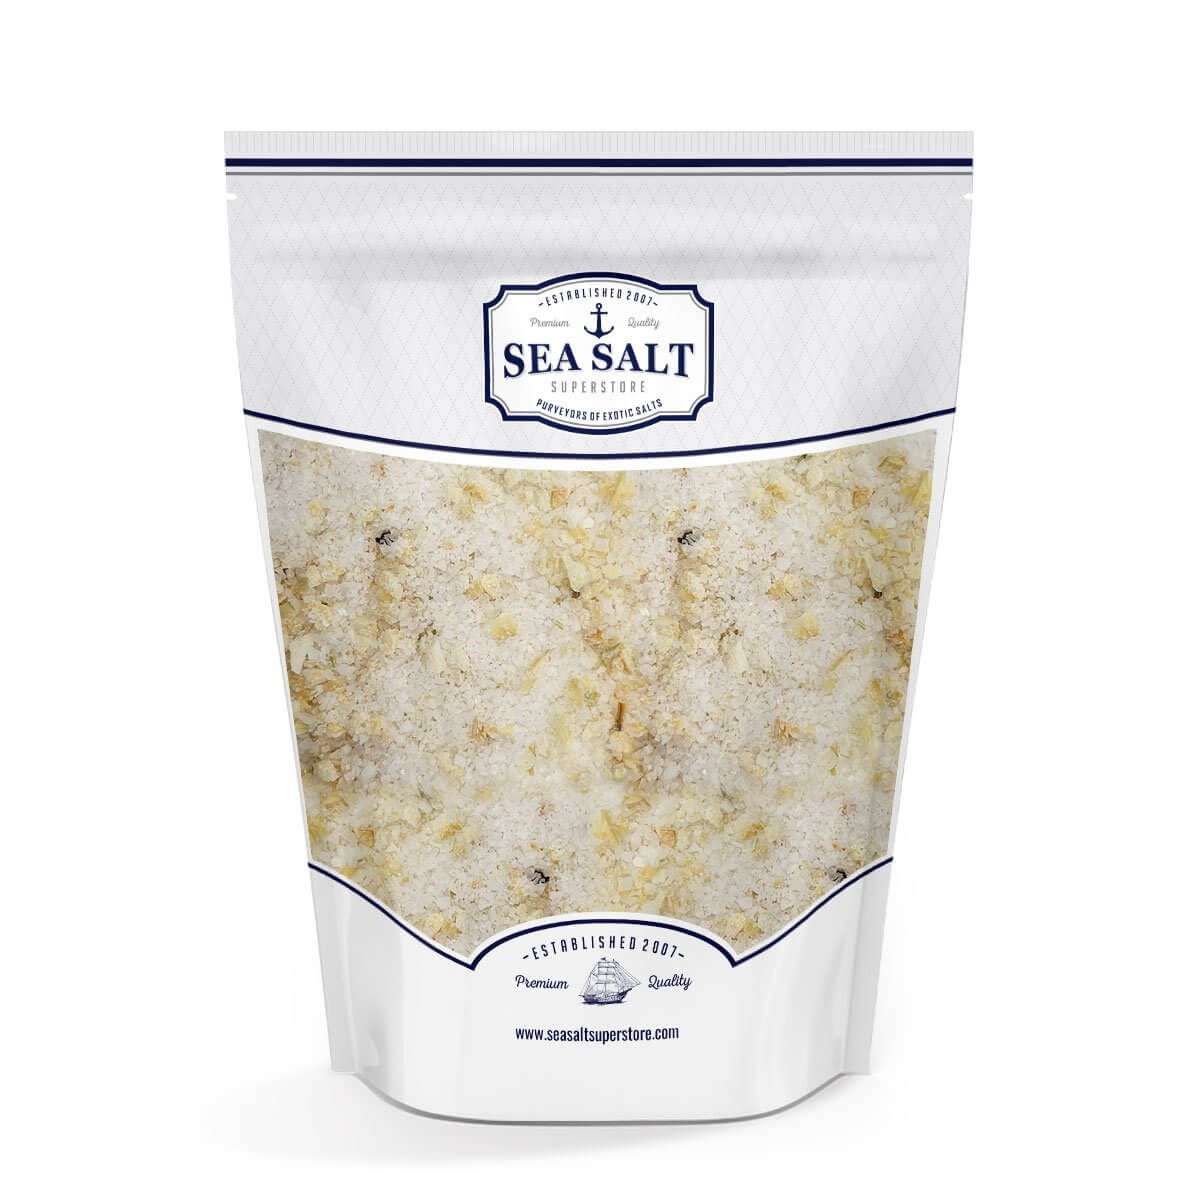 Garlic And Onion Sea Salt by Sea Salt Superstore - 40 lbs Finishing Salts